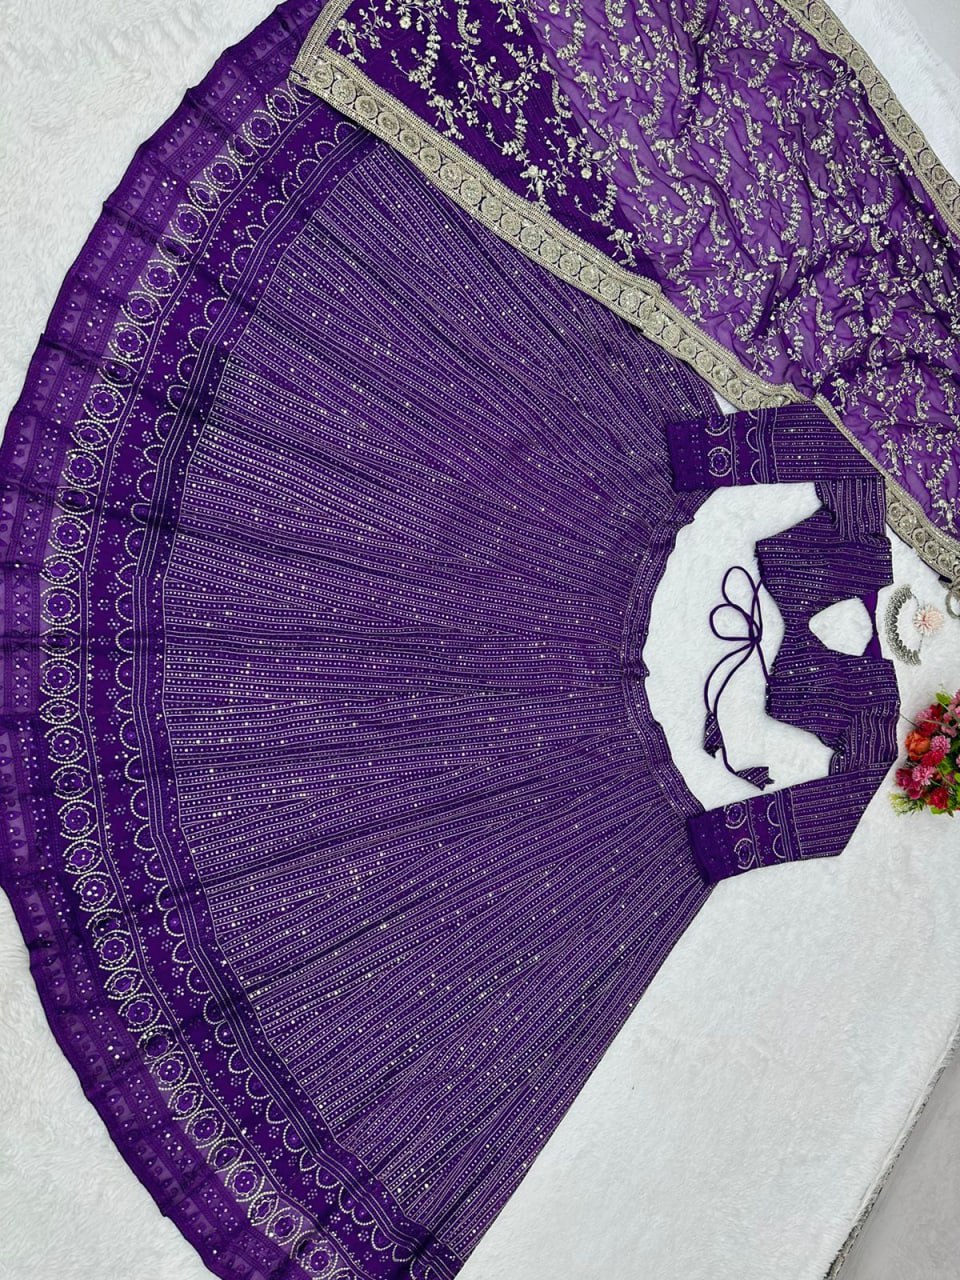 Purpale Colour Heavy Embroidary Work Wedding Wear Lehenga